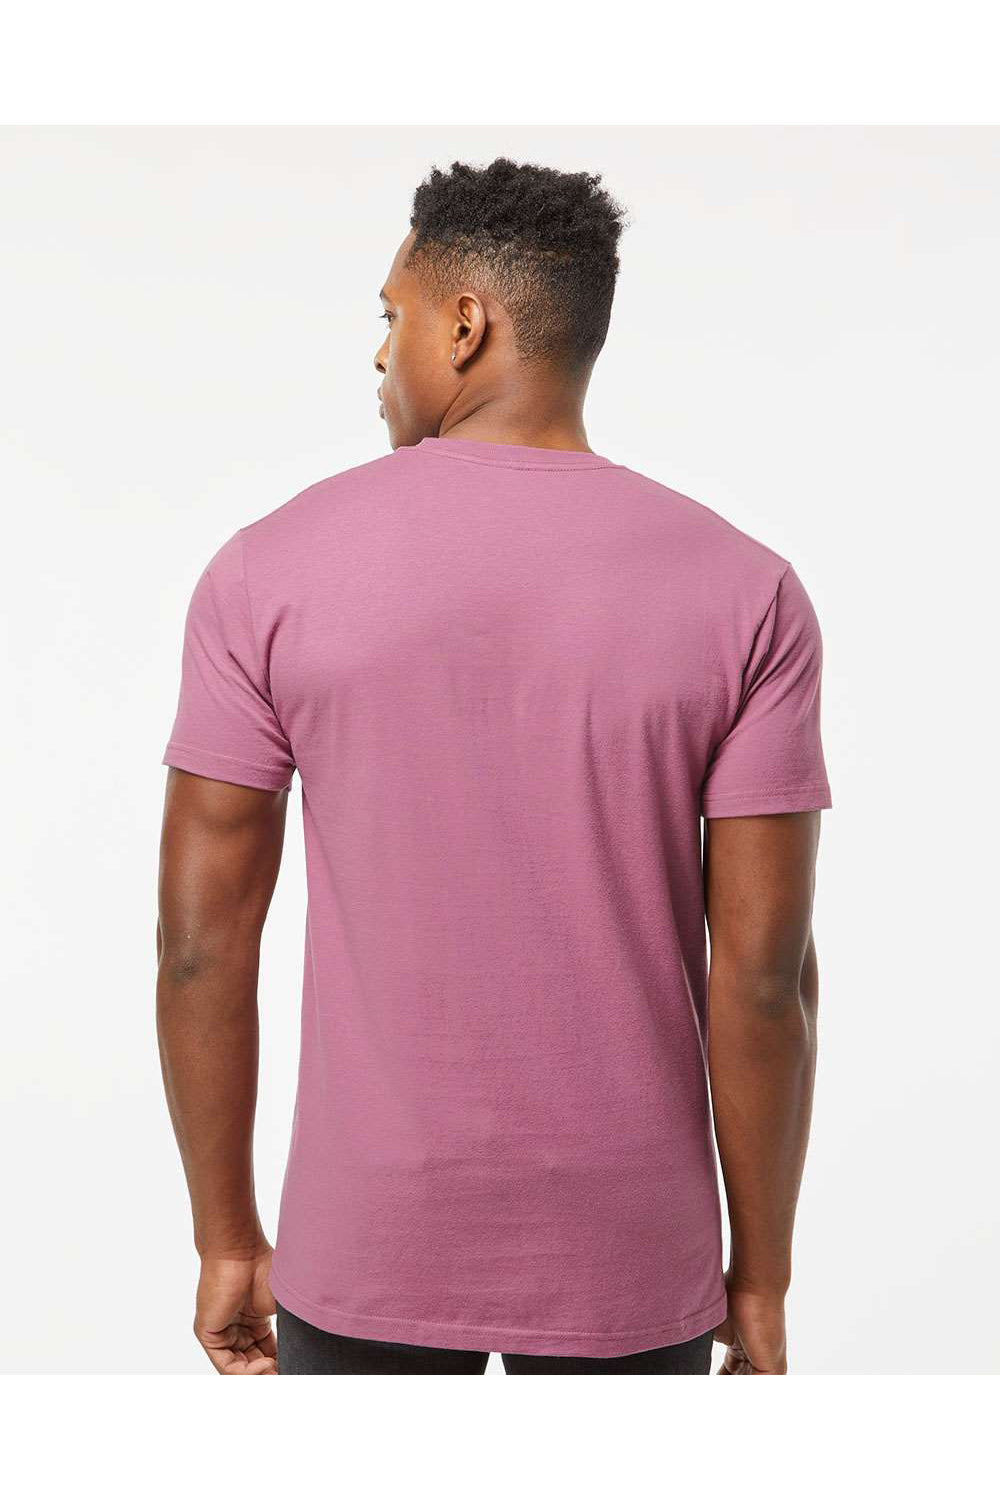 Tultex 290 Mens Jersey Short Sleeve Crewneck T-Shirt Cassis Pink Model Back